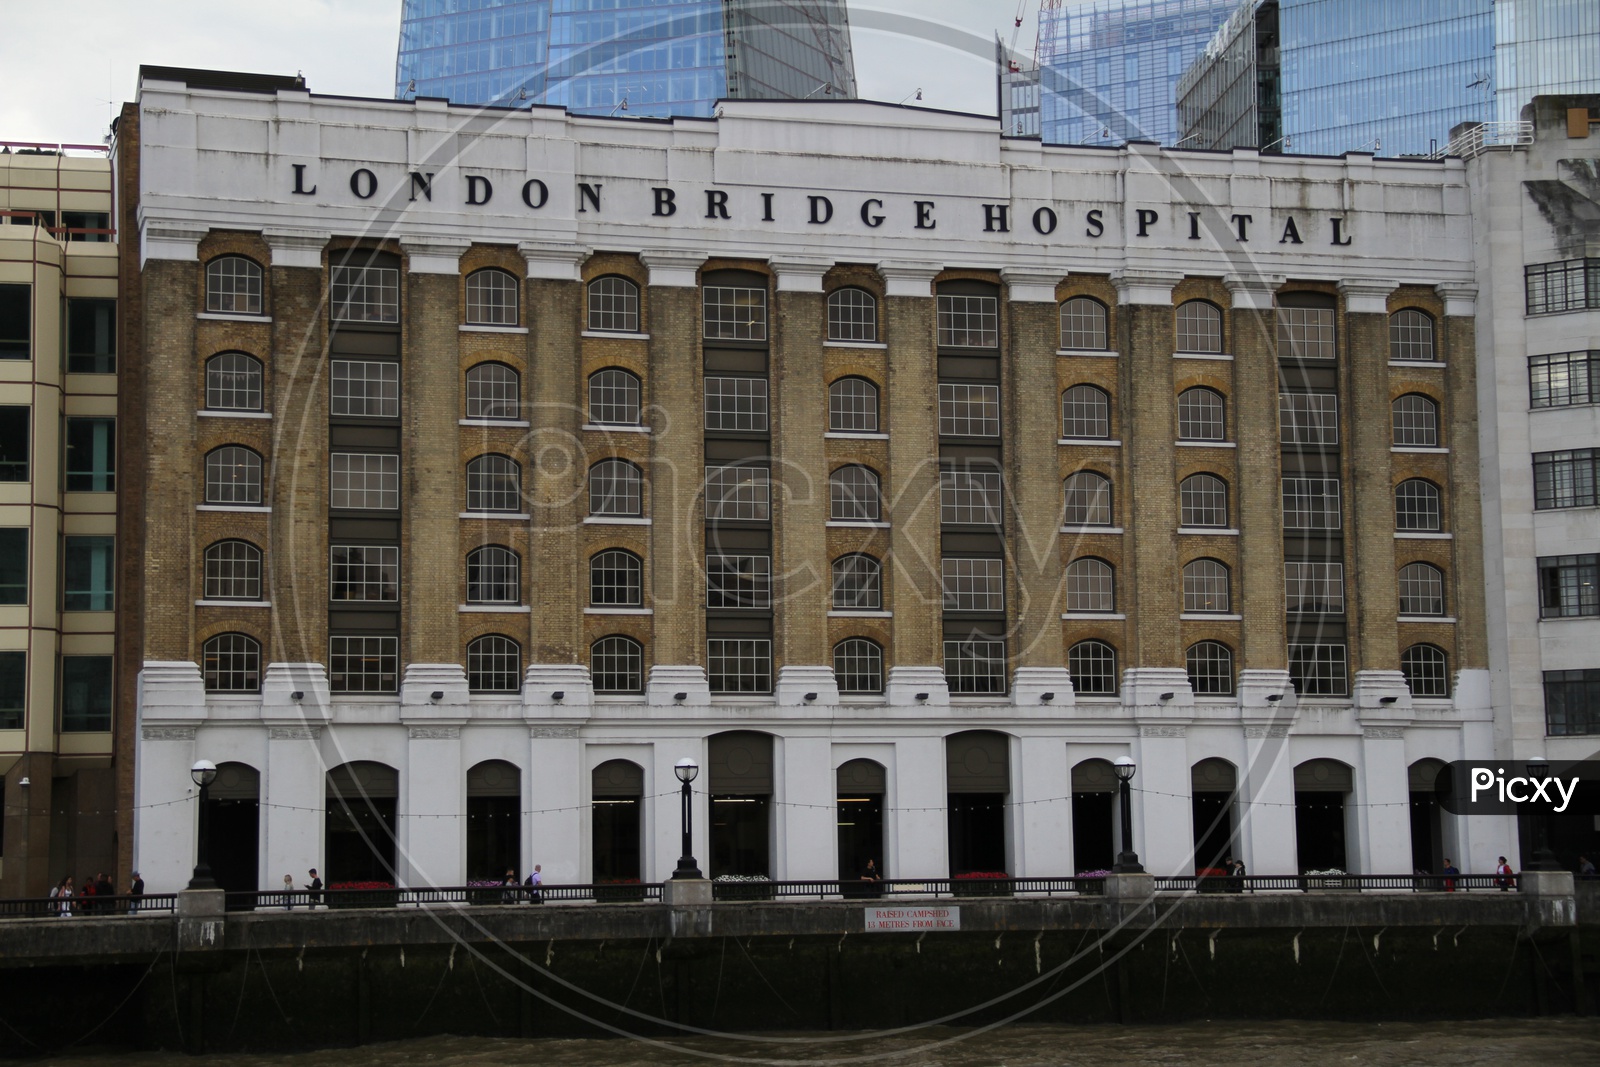 London Bridge Hospital near Thames River